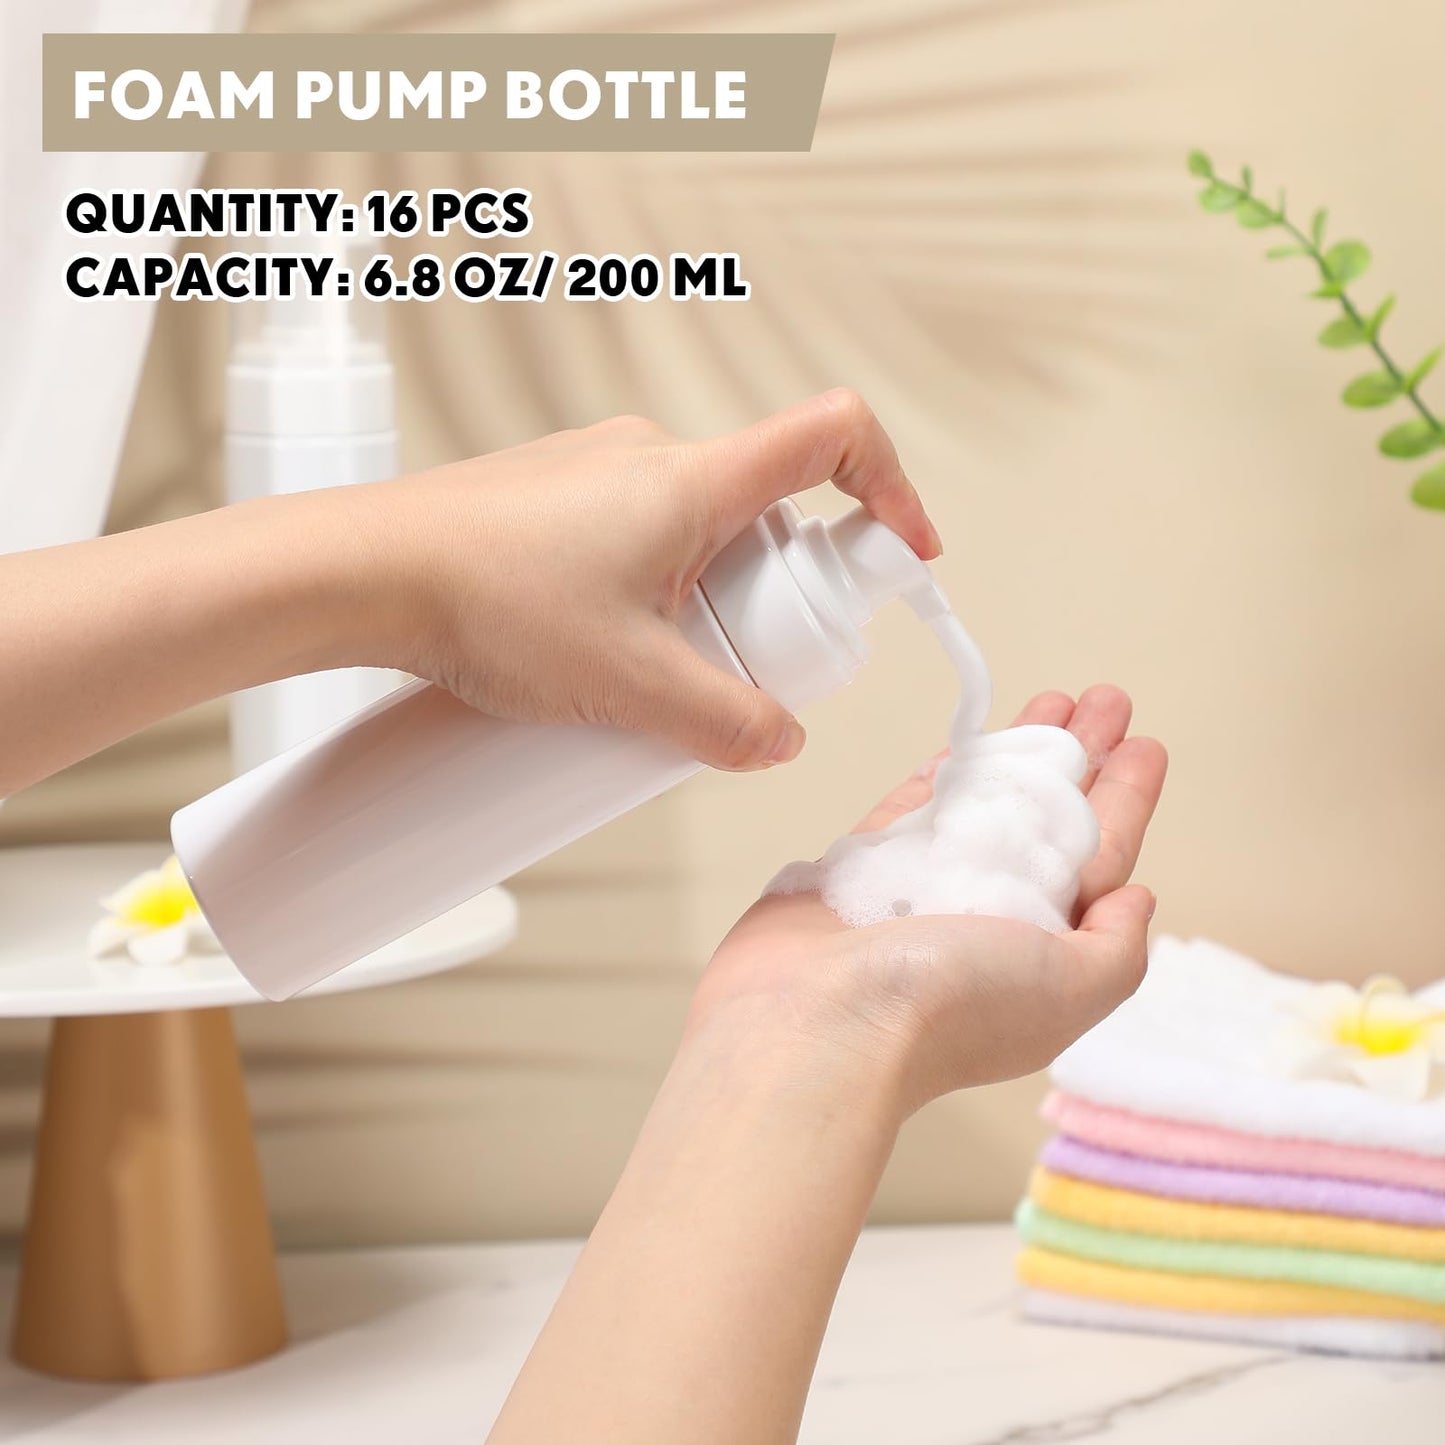 Bokon 16 Pcs Foam Pump Bottle 6.8 oz/ 200 ml Plastic Foaming Dispenser Travel Large Refillable Foam Soap Dispenser Pump for Shampoo Shower Hand Soap Foaming, White